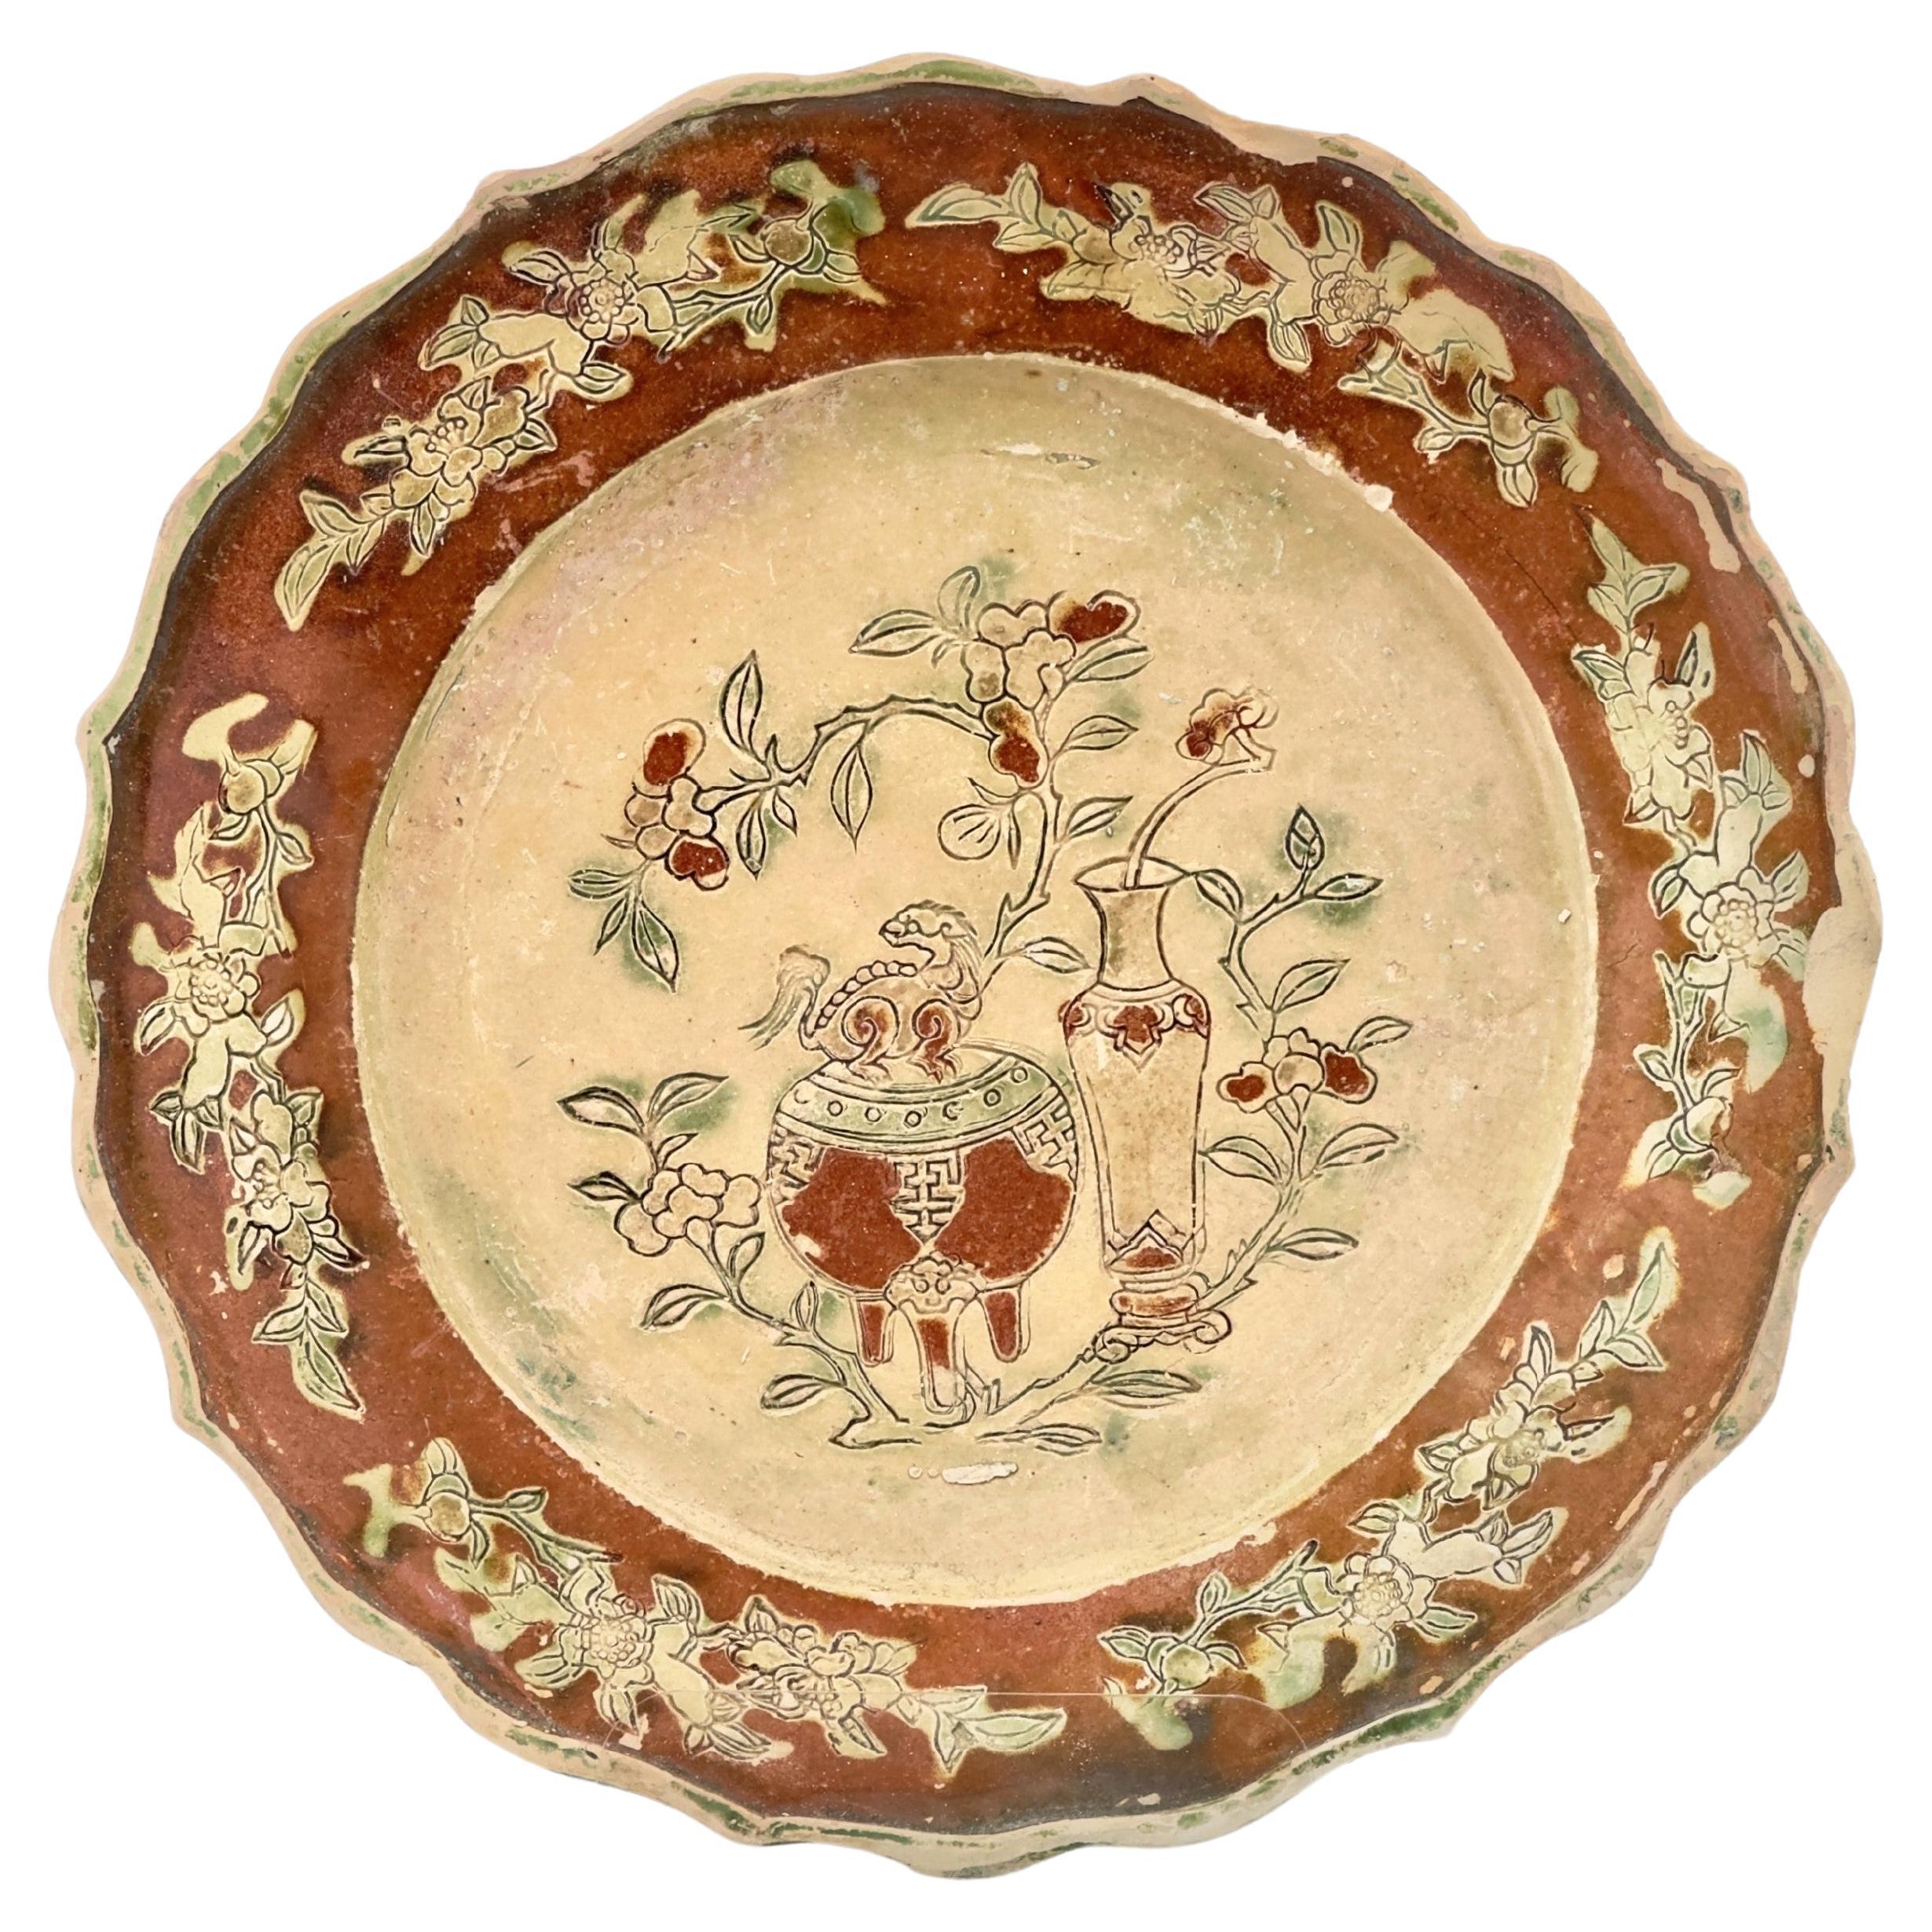 Three-glazed Earthenware dish circa 1725, Qing Dynasty, Yongzheng Reign